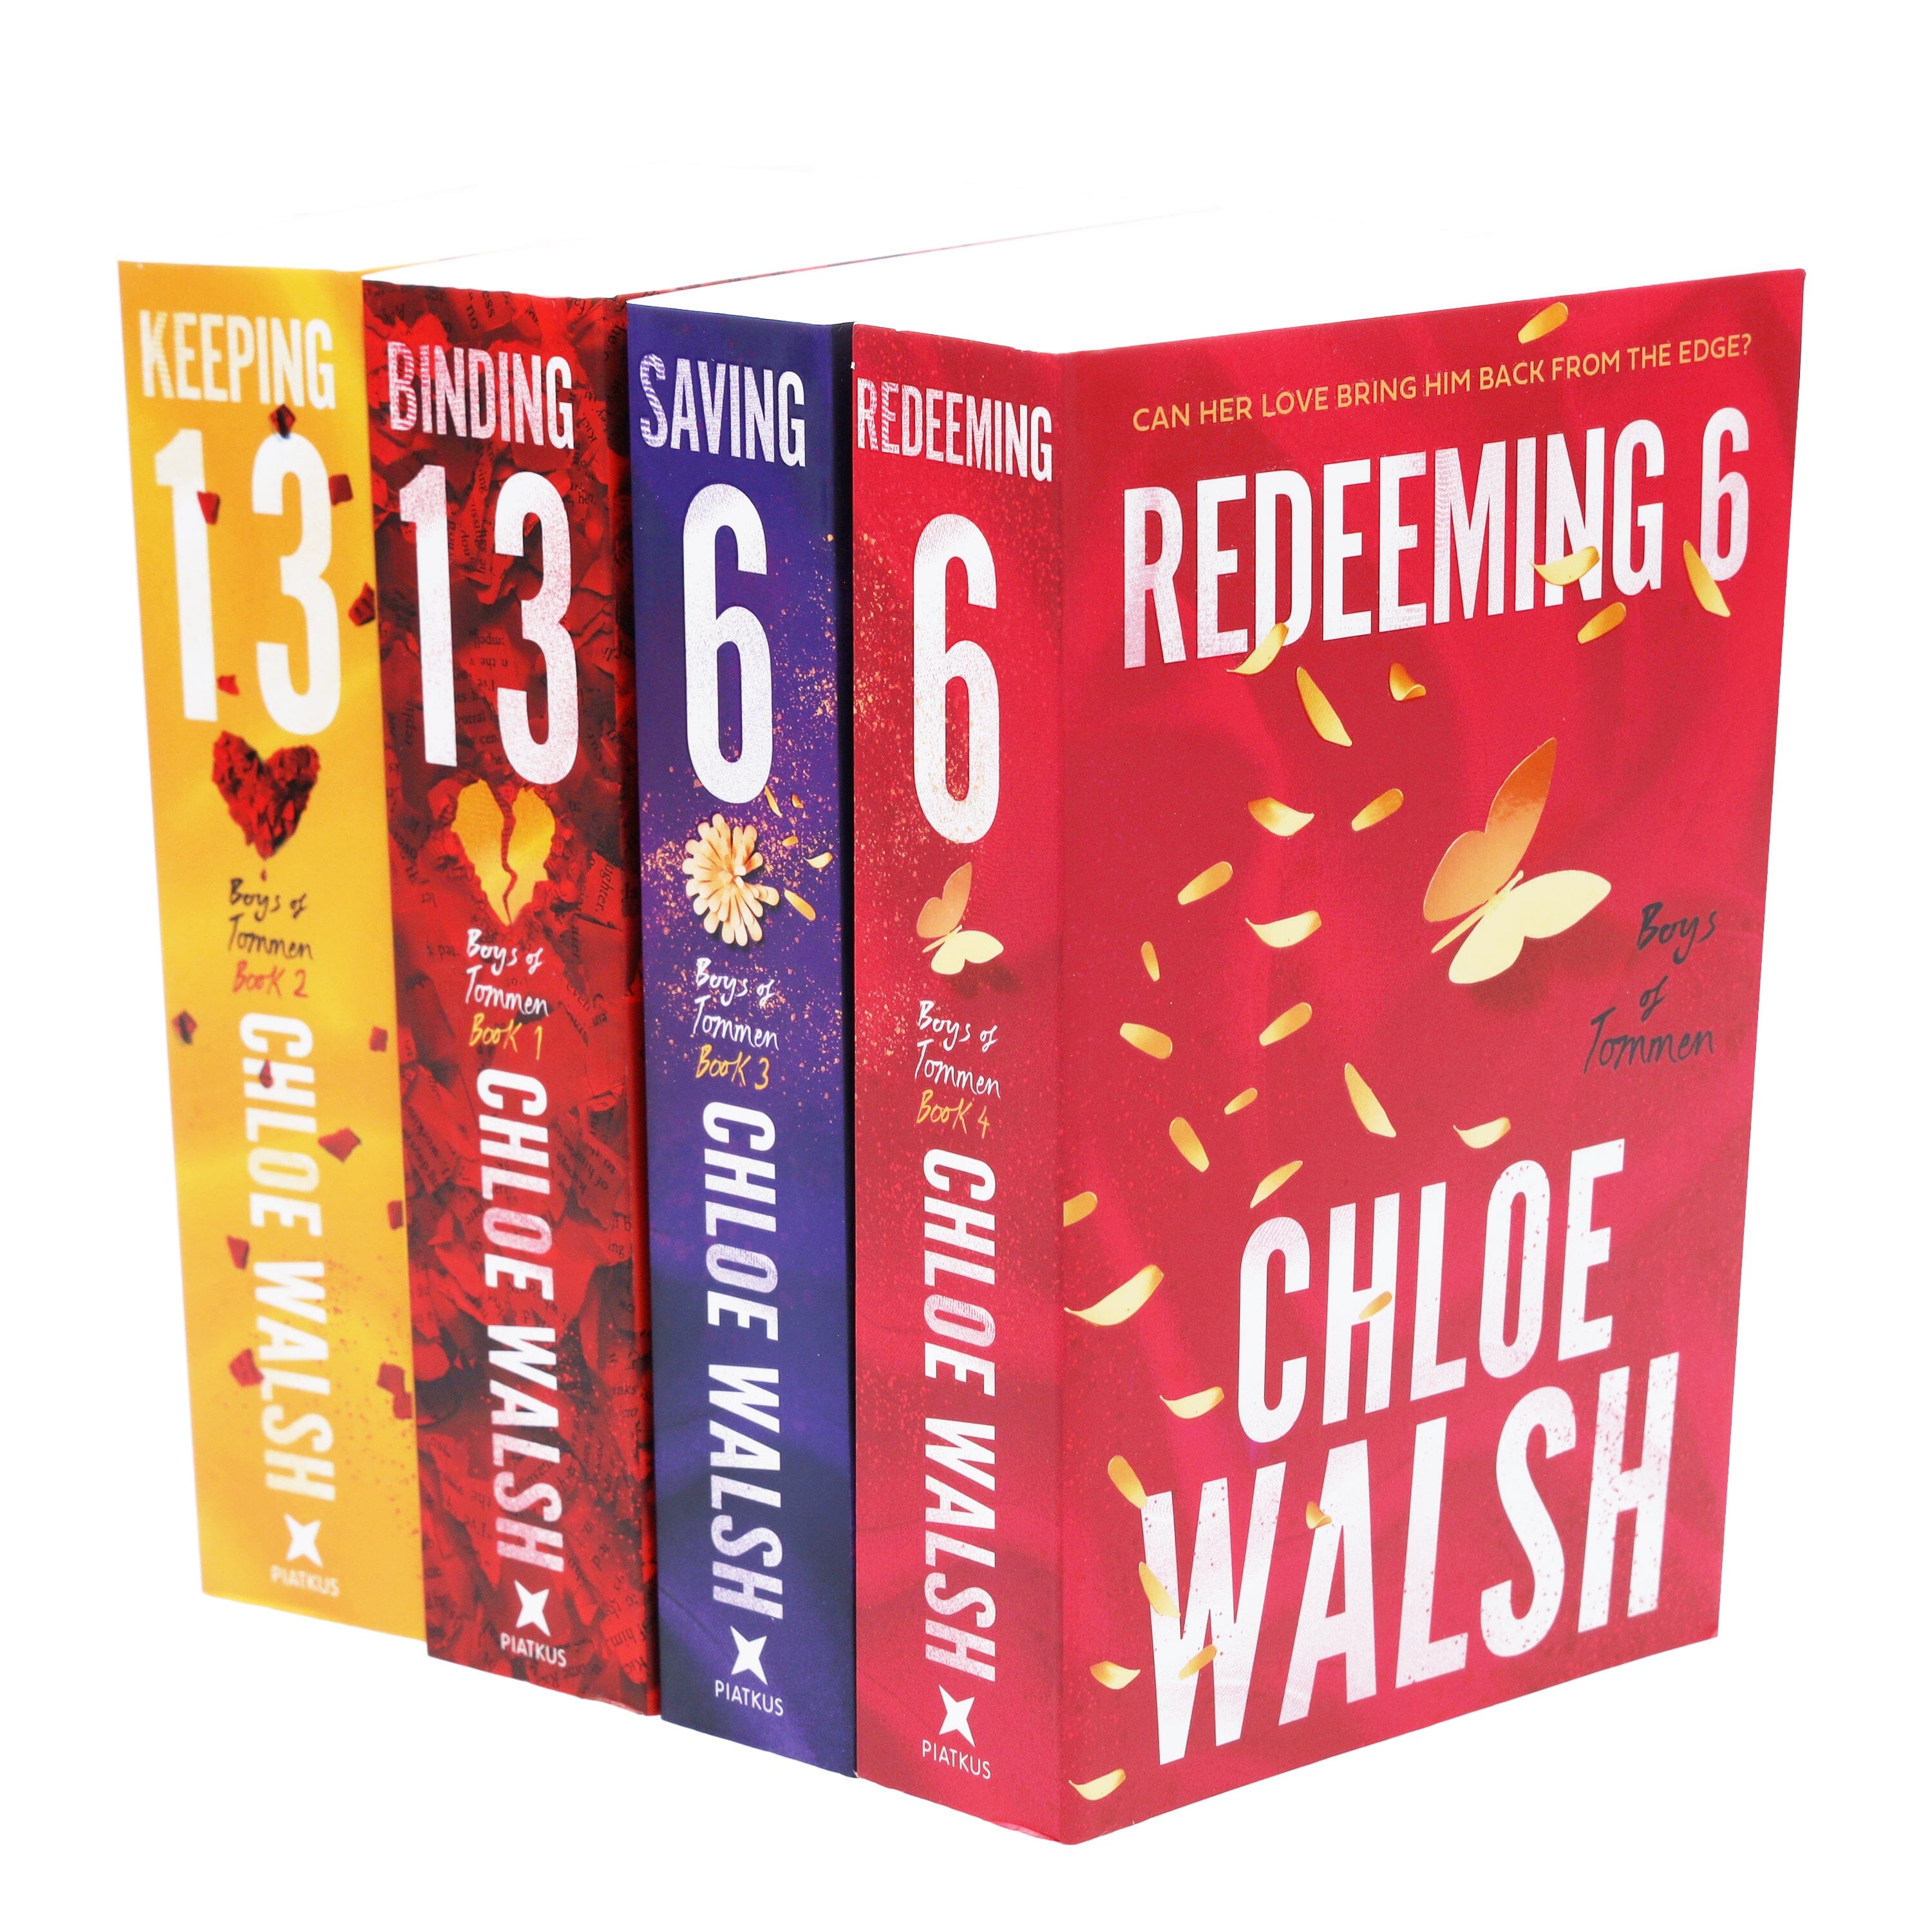 Keeping 13 - (boys Of Tommen) By Chloe Walsh (paperback) : Target